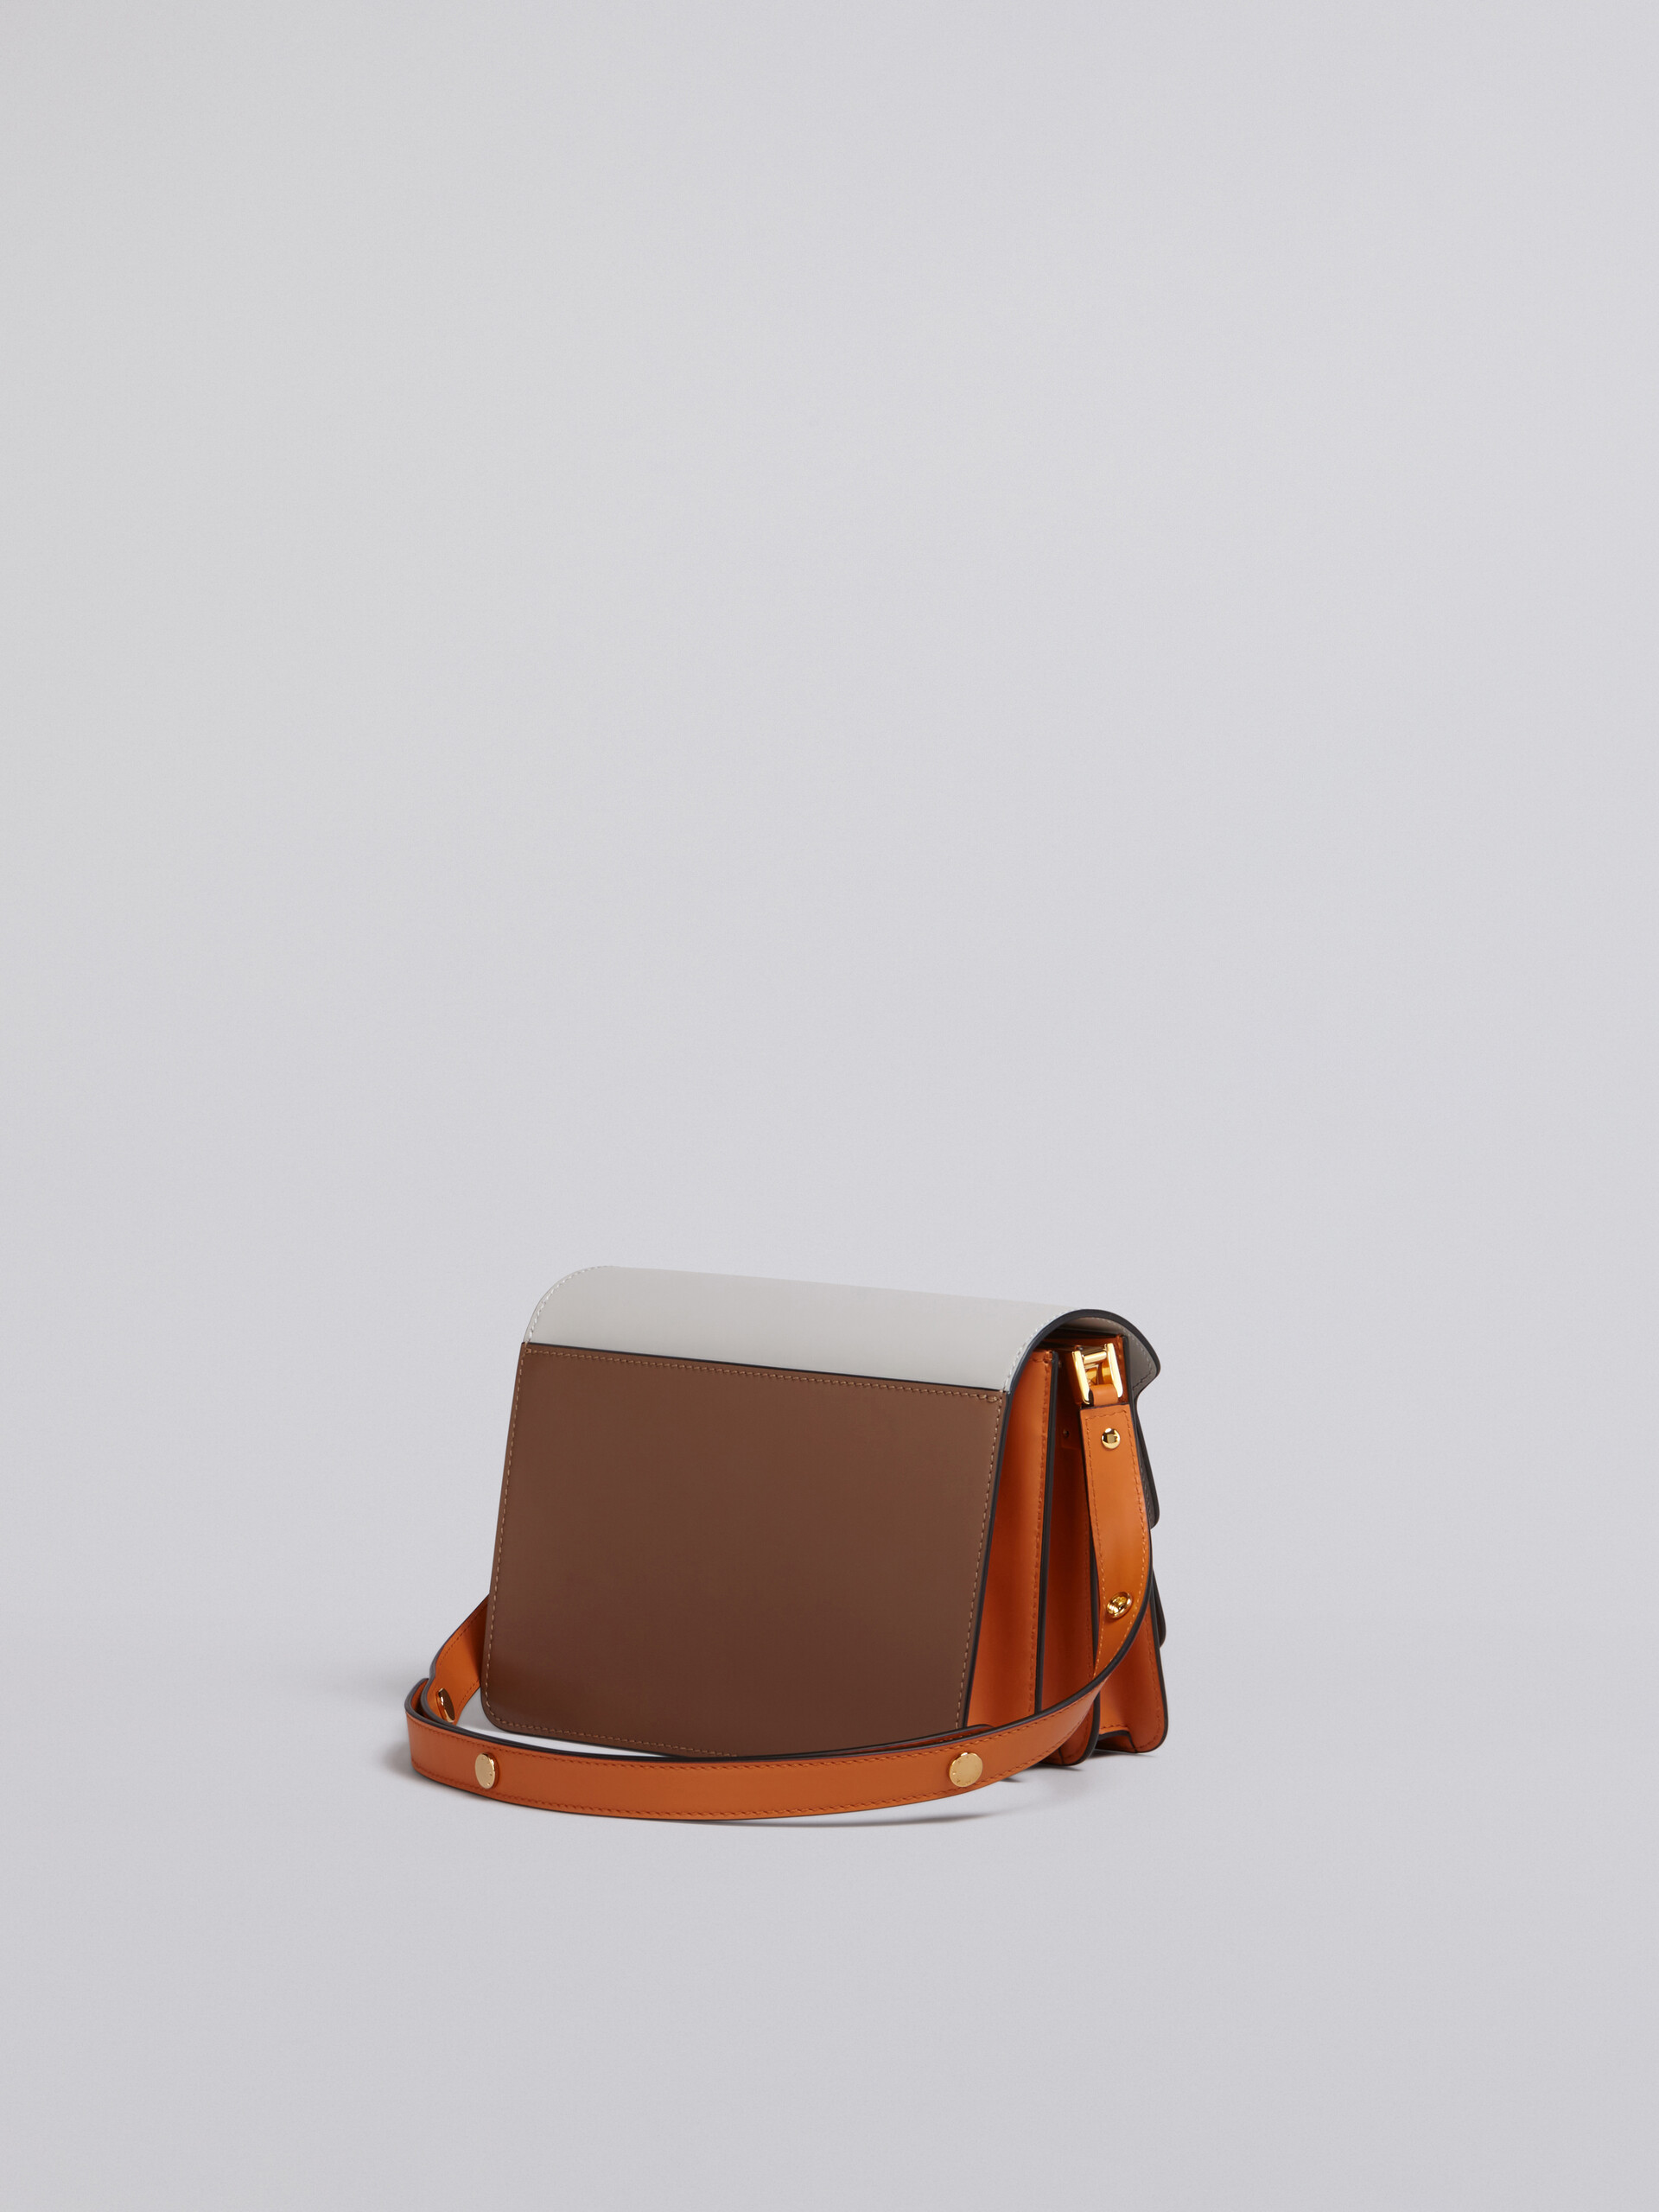 TRUNK medium bag in grey brown and orange leather - Shoulder Bags - Image 2